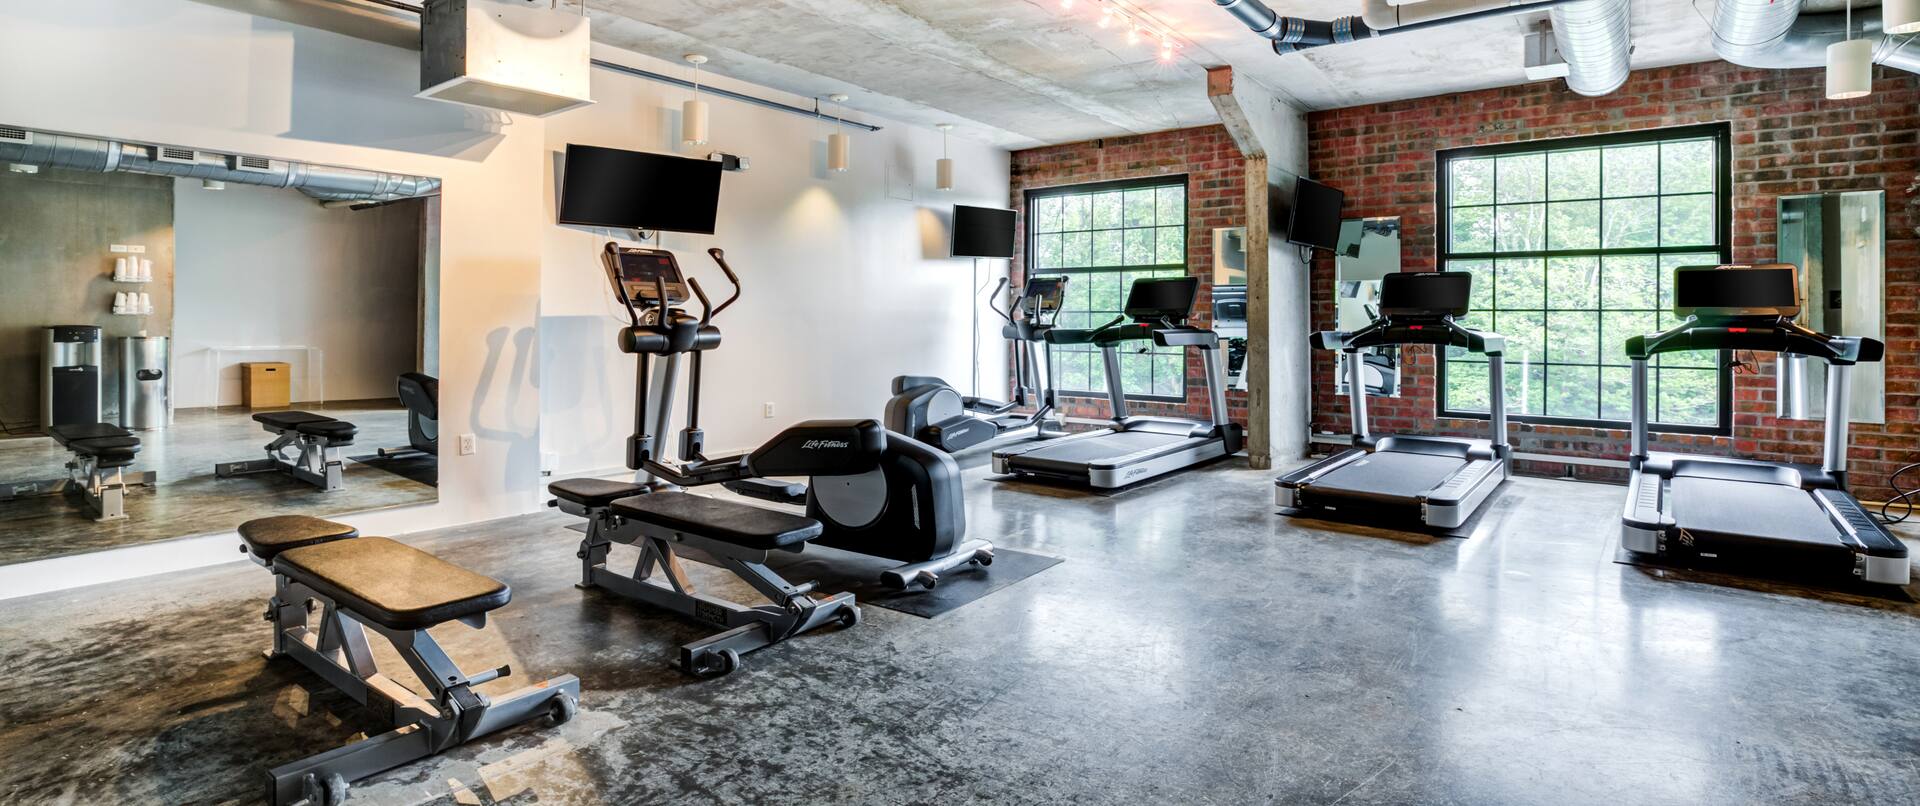 Treadmills and Modern Exercise Equipment in Fitness Center